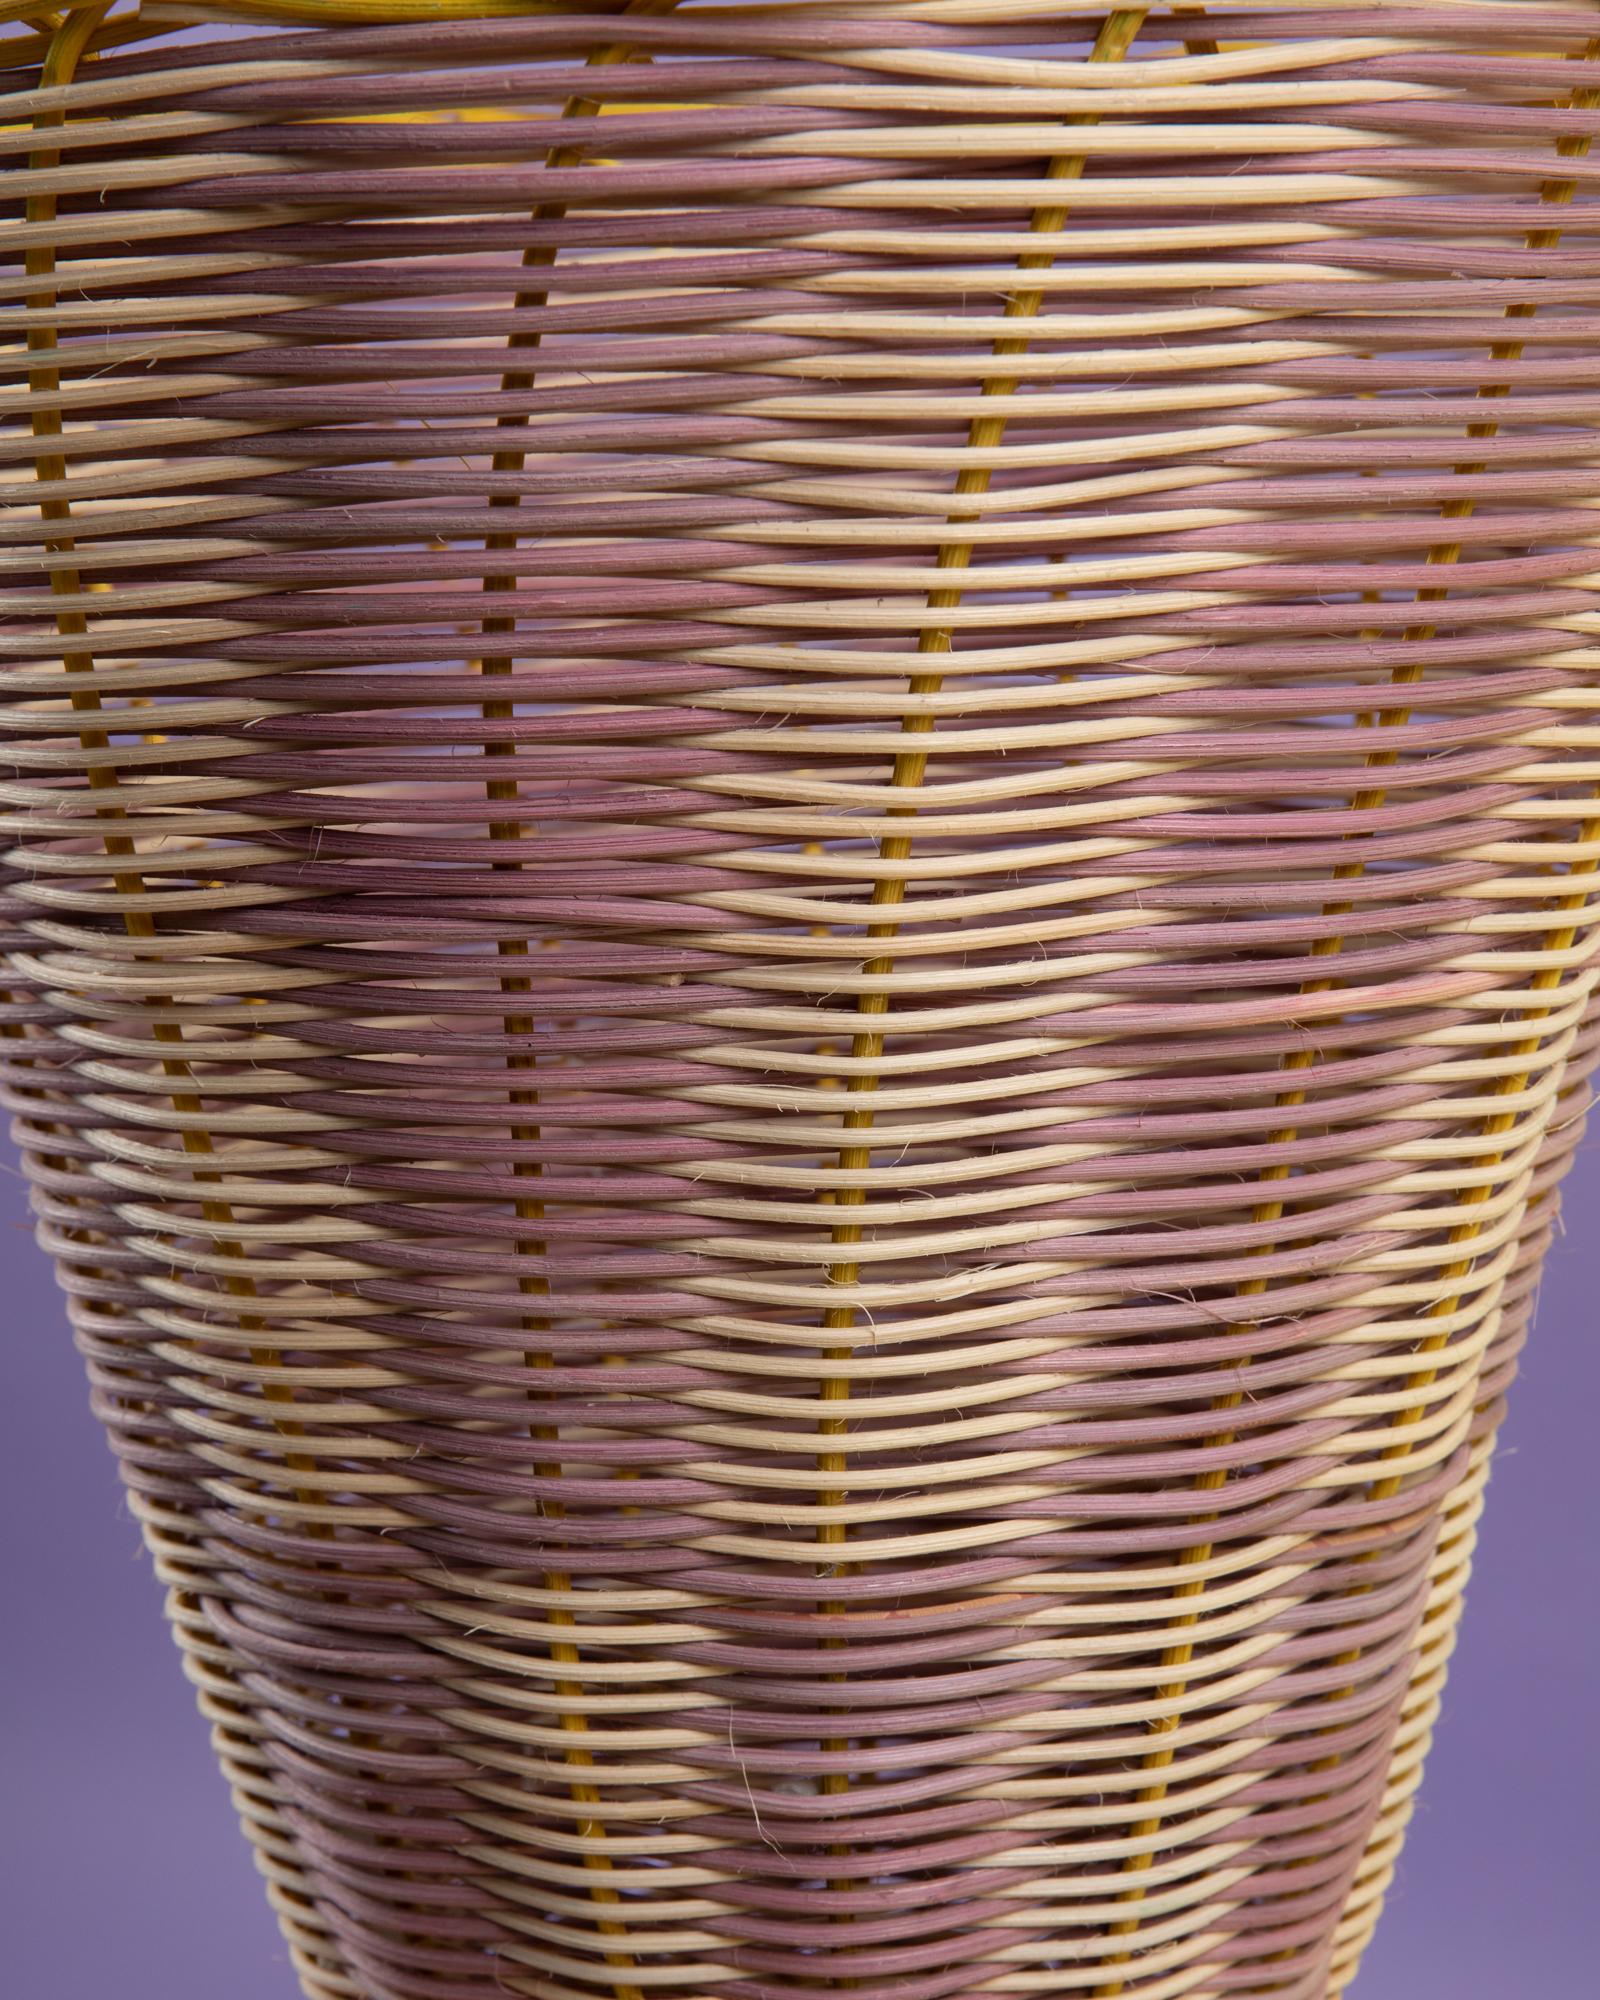 Modern Petal Vase hand woven in Lavender, Natural and Lemon by Studio Herron